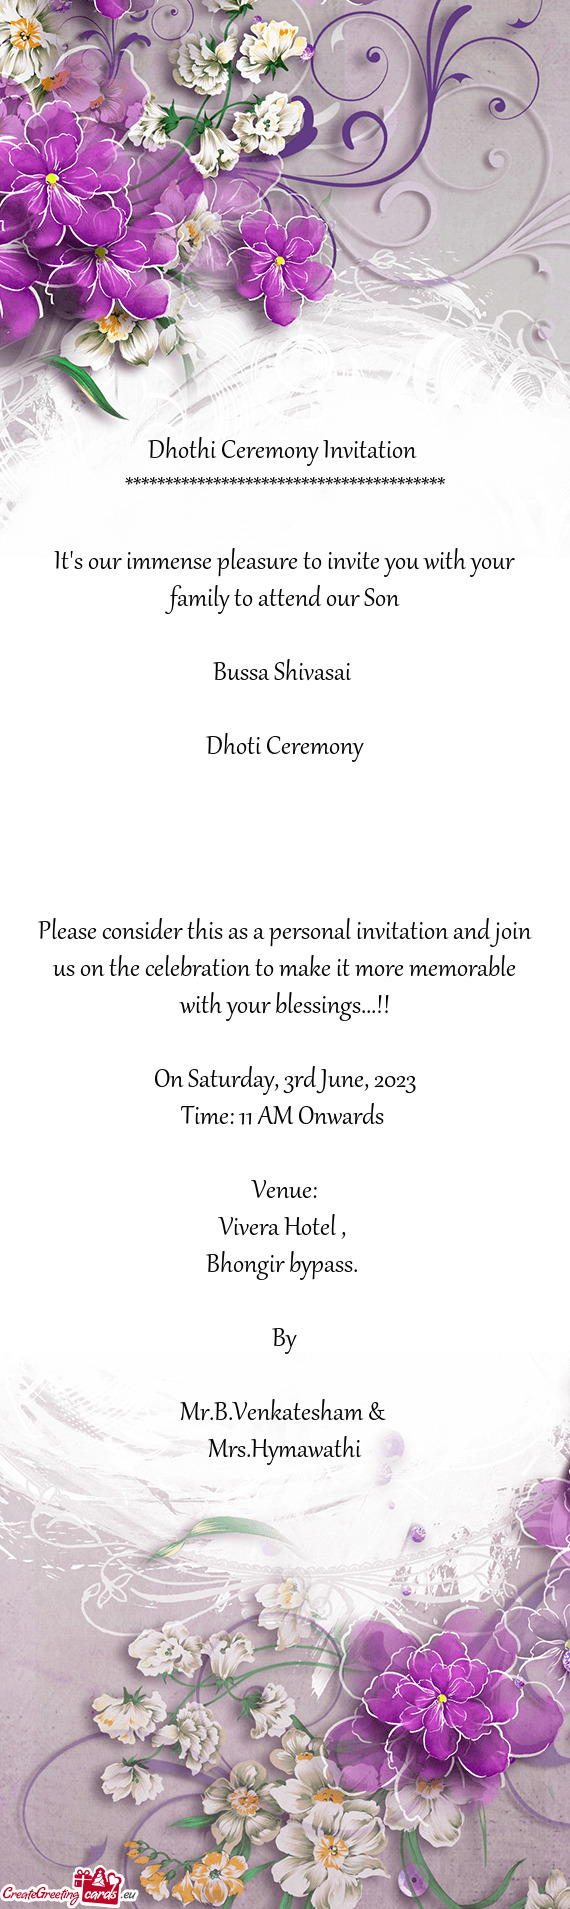 Dhothi Ceremony Invitation